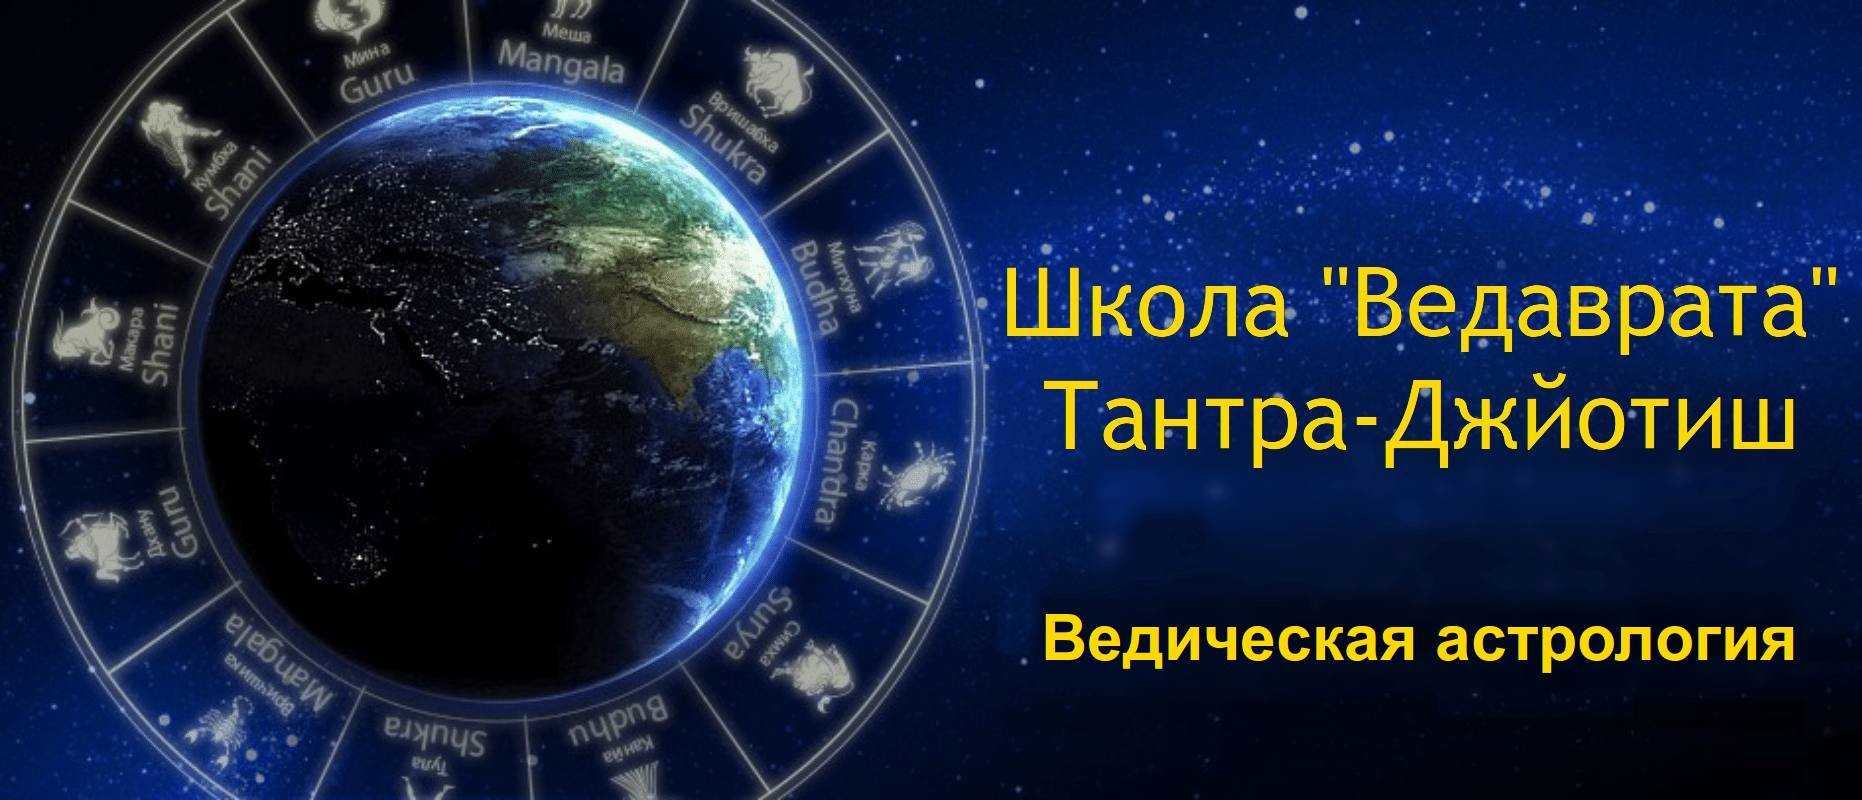 *** Школа Ведаврата - Ведична астрологія Джйотіш - Хмельницький,Україна 2016 ***